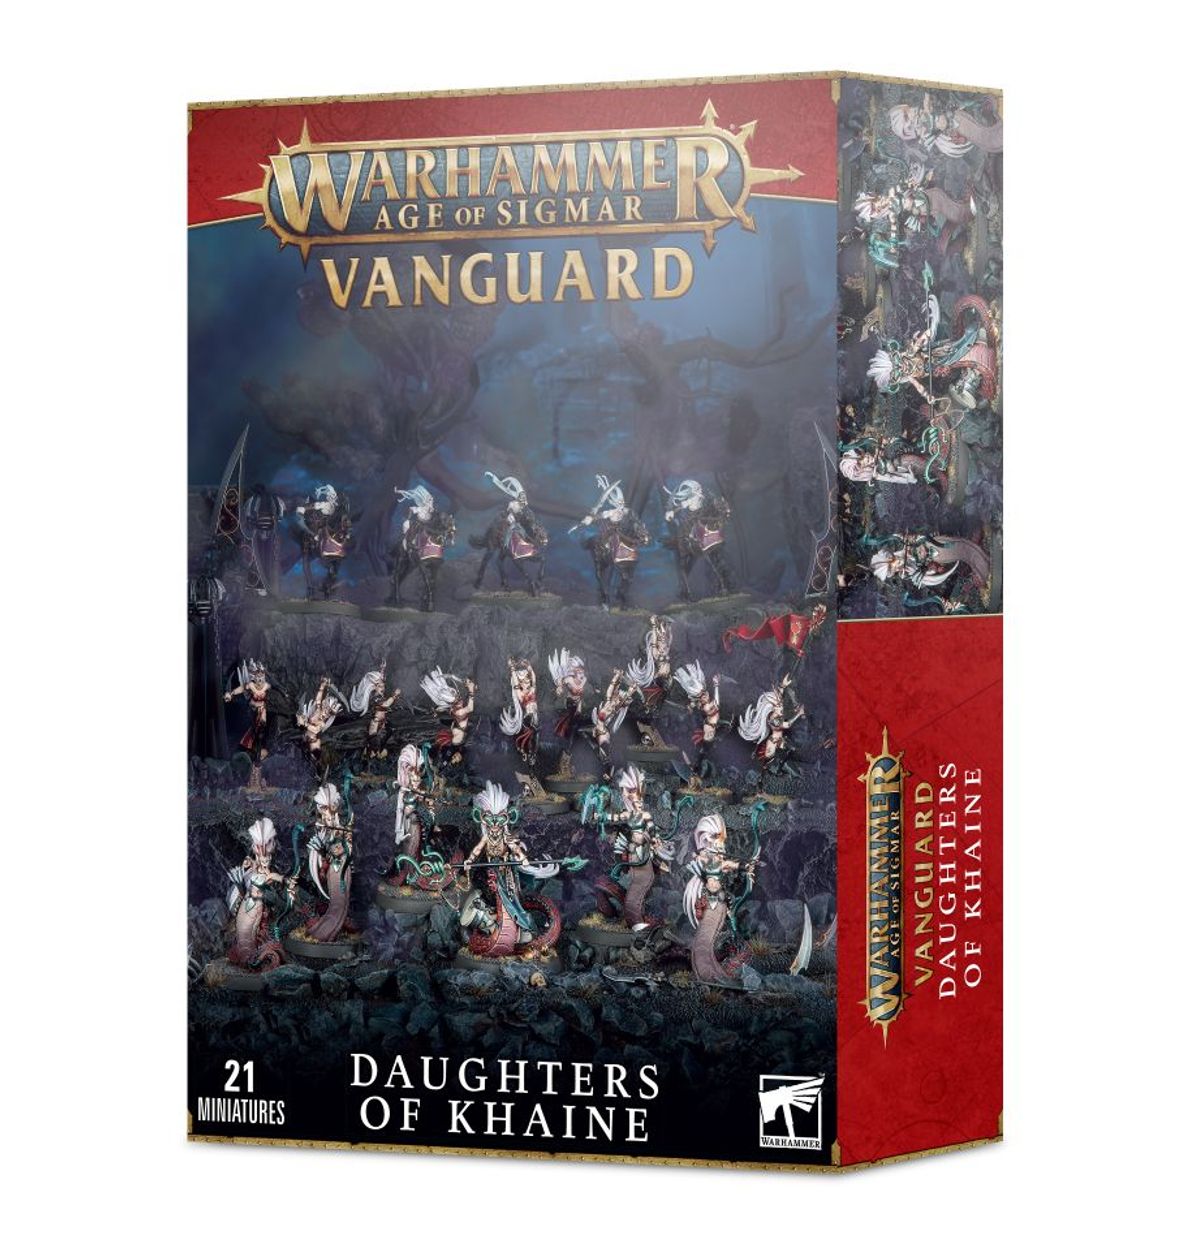 Миниатюры для игры Games Workshop Warhammer Age of Sigmar: Vanguard - Daughters of Khaine vanguard bluetooth king sny 30b csr8675 pcm1794 bluetooth 5 0 receiver decoder dac ldac